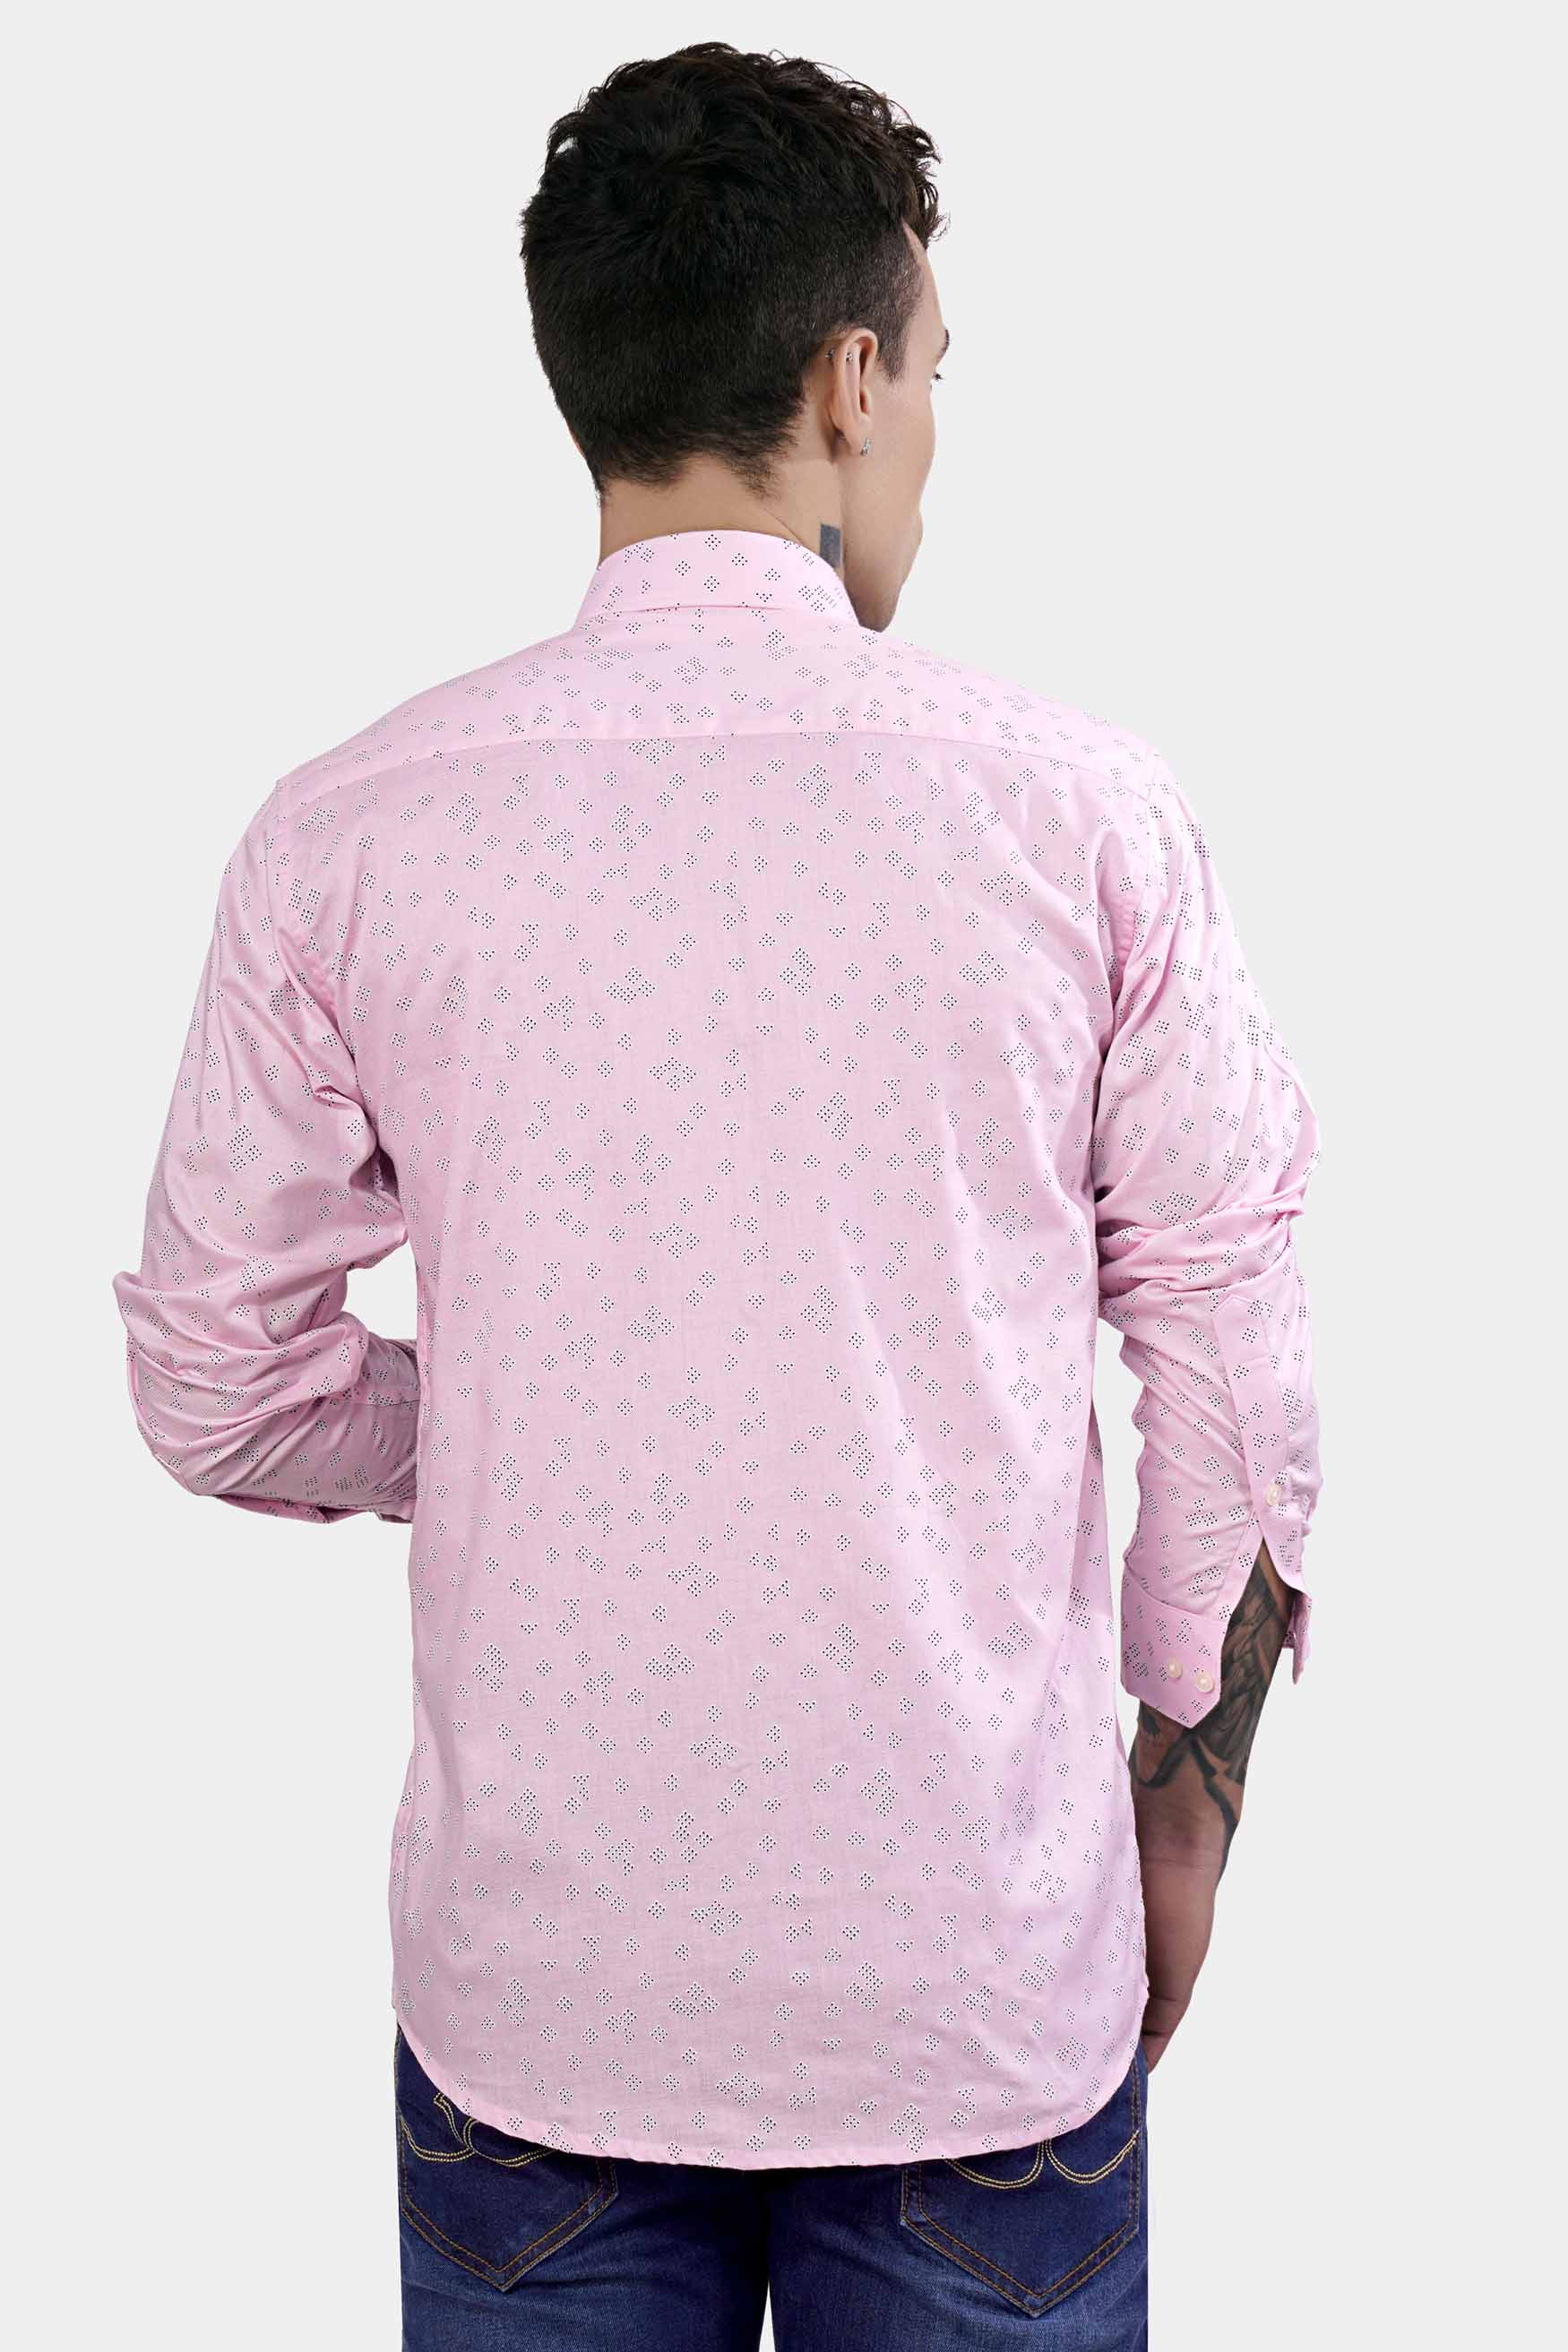 Kawaii Pink Dobby Textured Premium Giza Cotton Shirt 11399-CA-38, 11399-CA-H-38, 11399-CA-39, 11399-CA-H-39, 11399-CA-40, 11399-CA-H-40, 11399-CA-42, 11399-CA-H-42, 11399-CA-44, 11399-CA-H-44, 11399-CA-46, 11399-CA-H-46, 11399-CA-48, 11399-CA-H-48, 11399-CA-50, 11399-CA-H-50, 11399-CA-52, 11399-CA-H-52